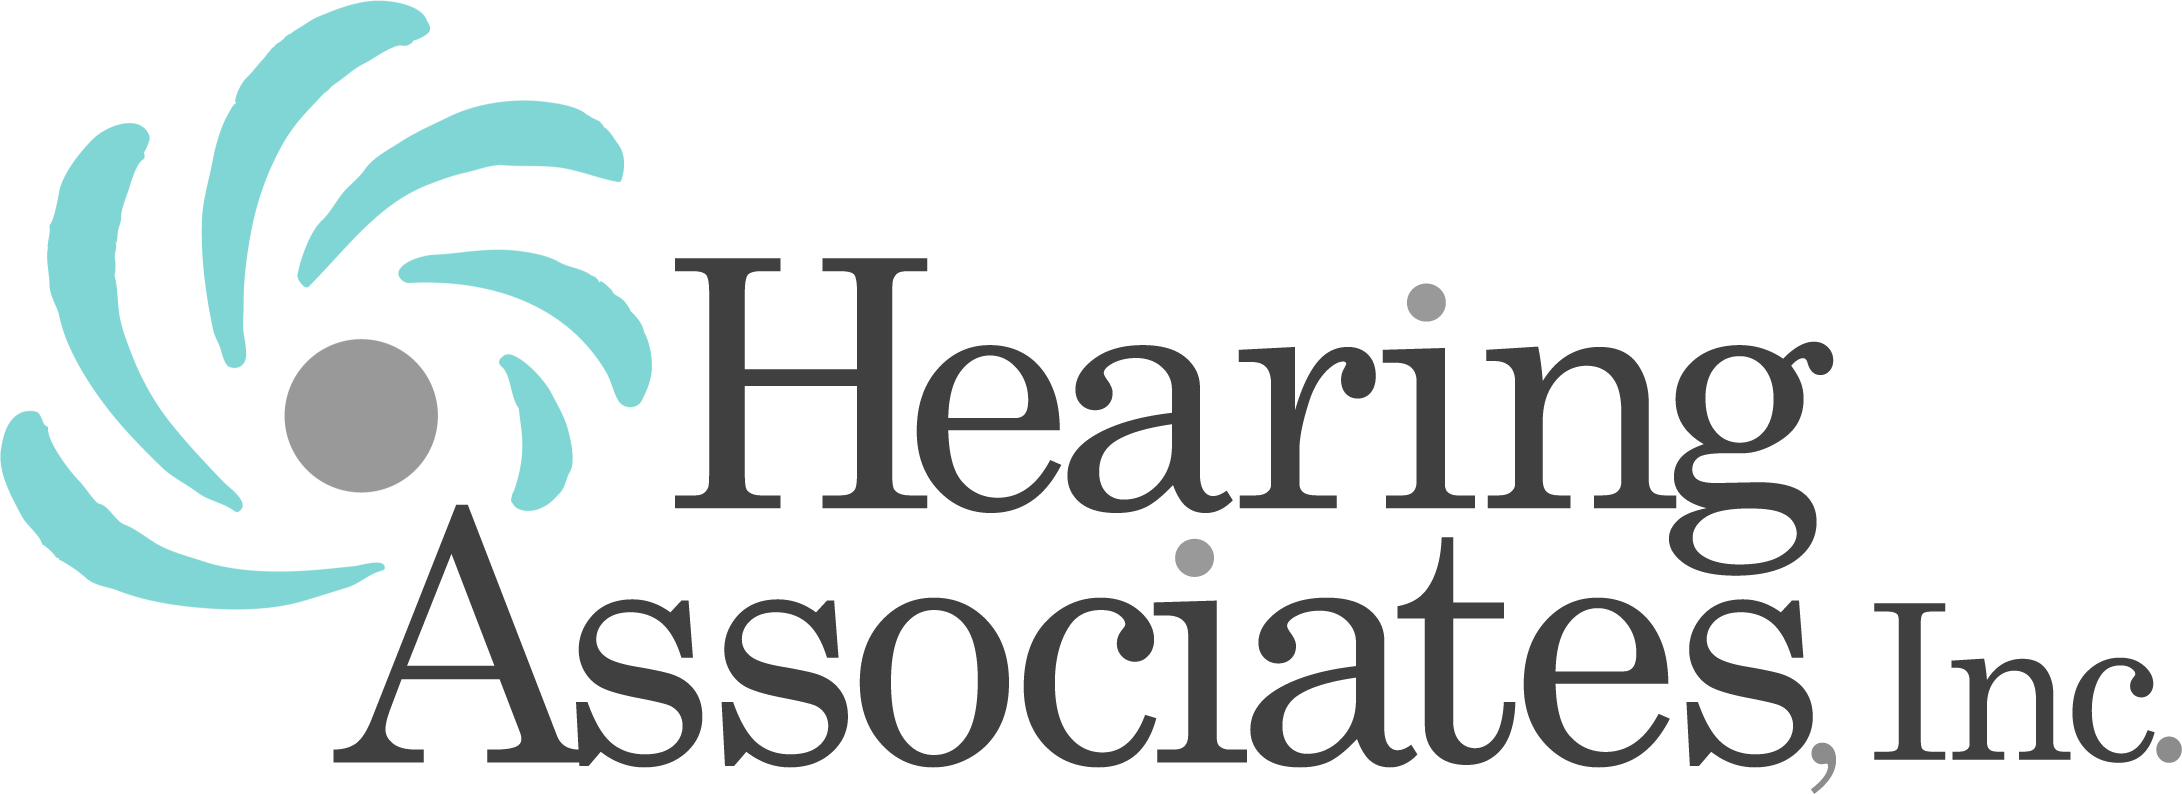 Hearing Associates, Inc. header logo